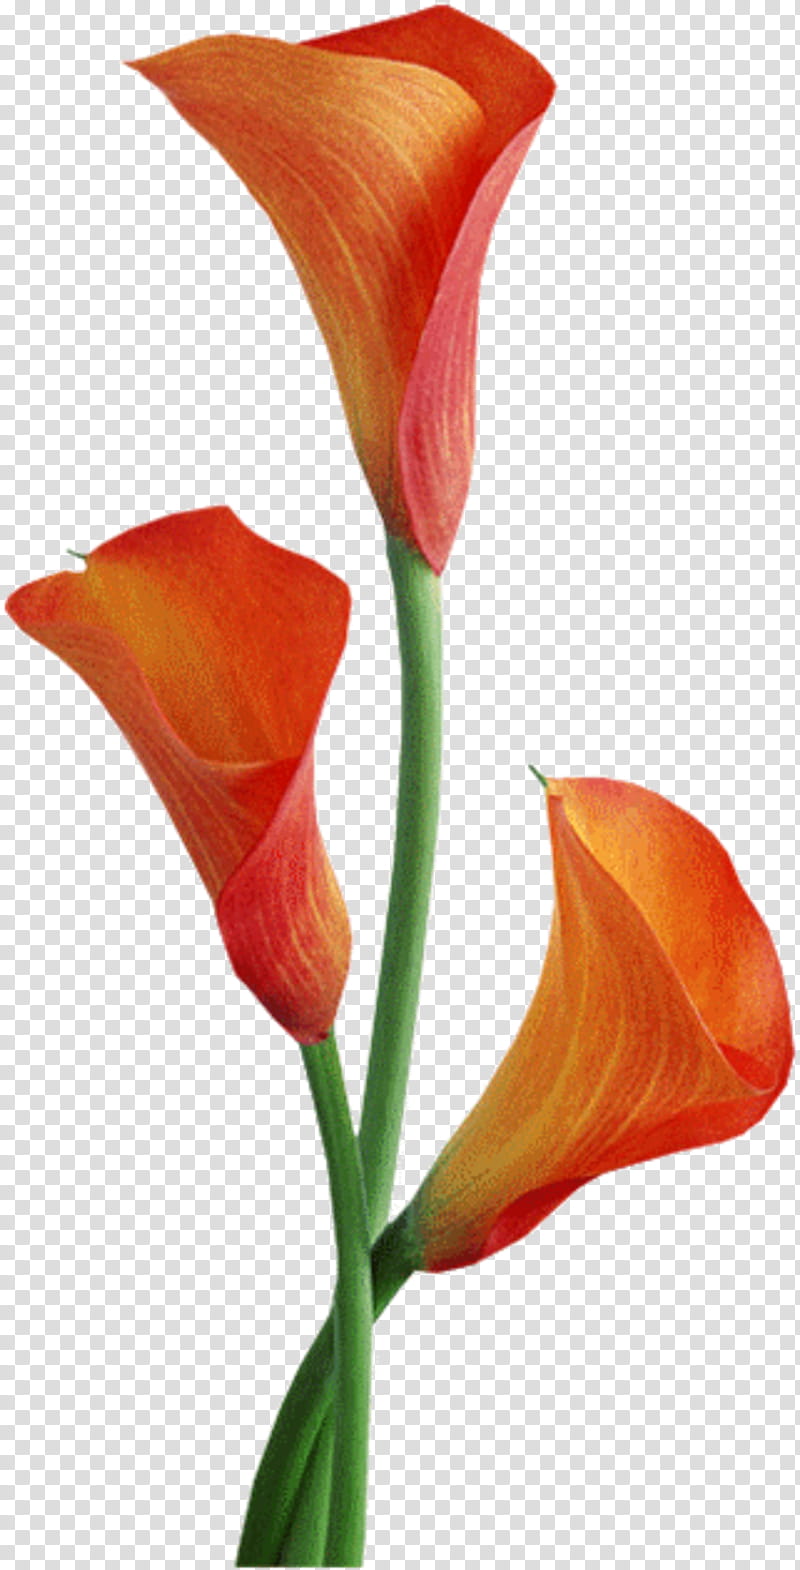 Flowers, Arumlily, Orange Lily, Arum Lilies, Waterarum, Orange Daylily, Pink Calla Lily, Bog Arum transparent background PNG clipart